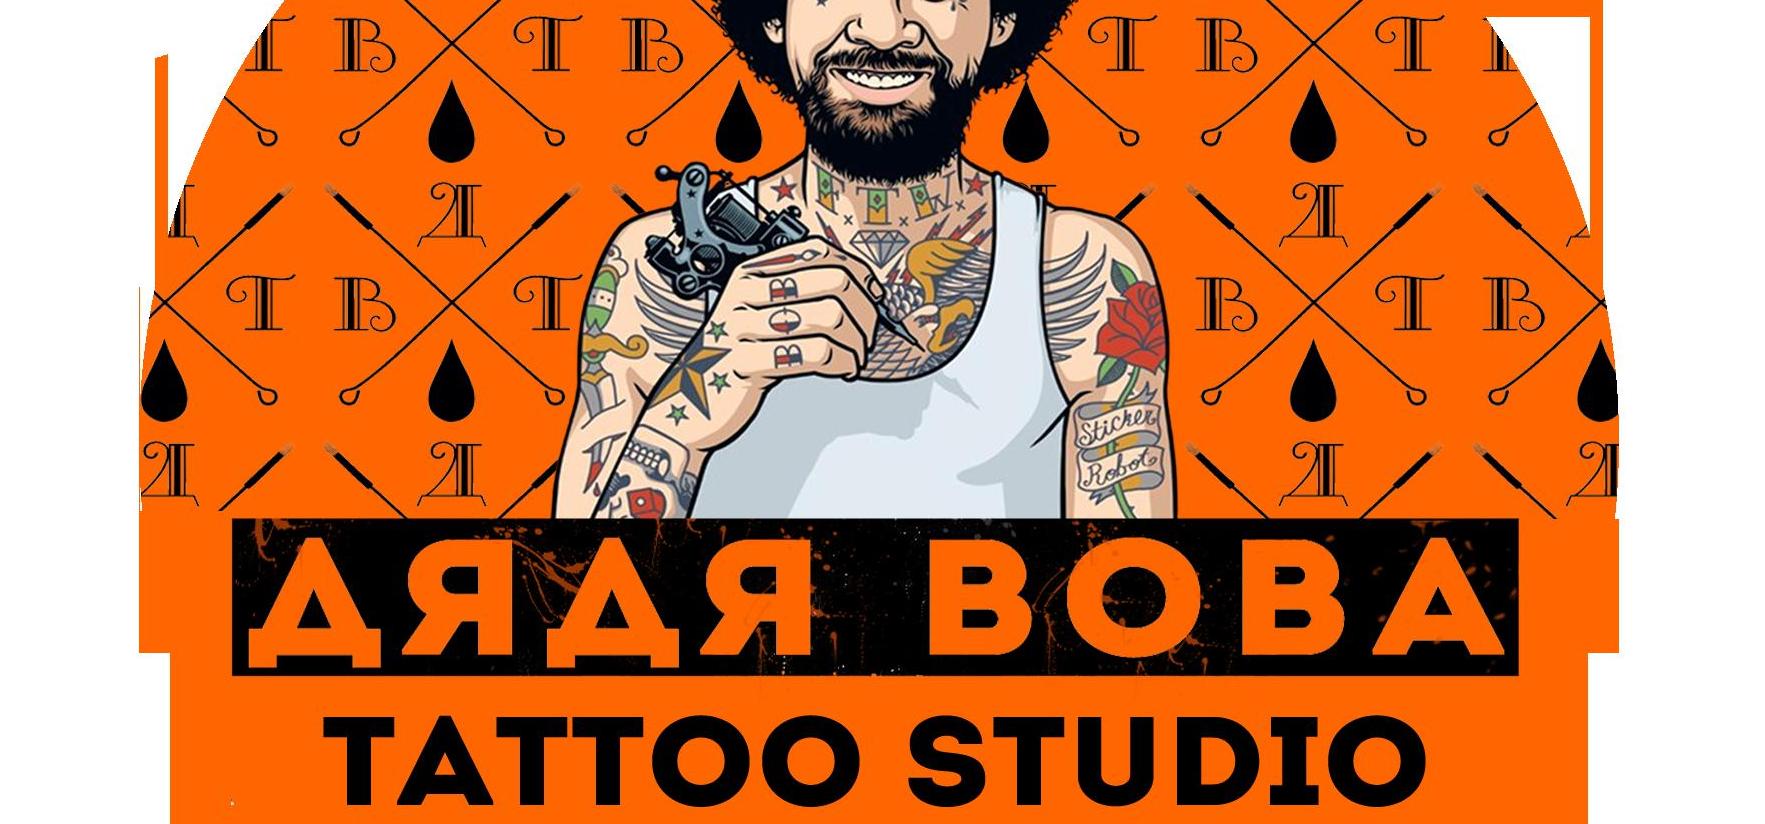 Справочник - 1 - Дядя Вова, Tattoo studio